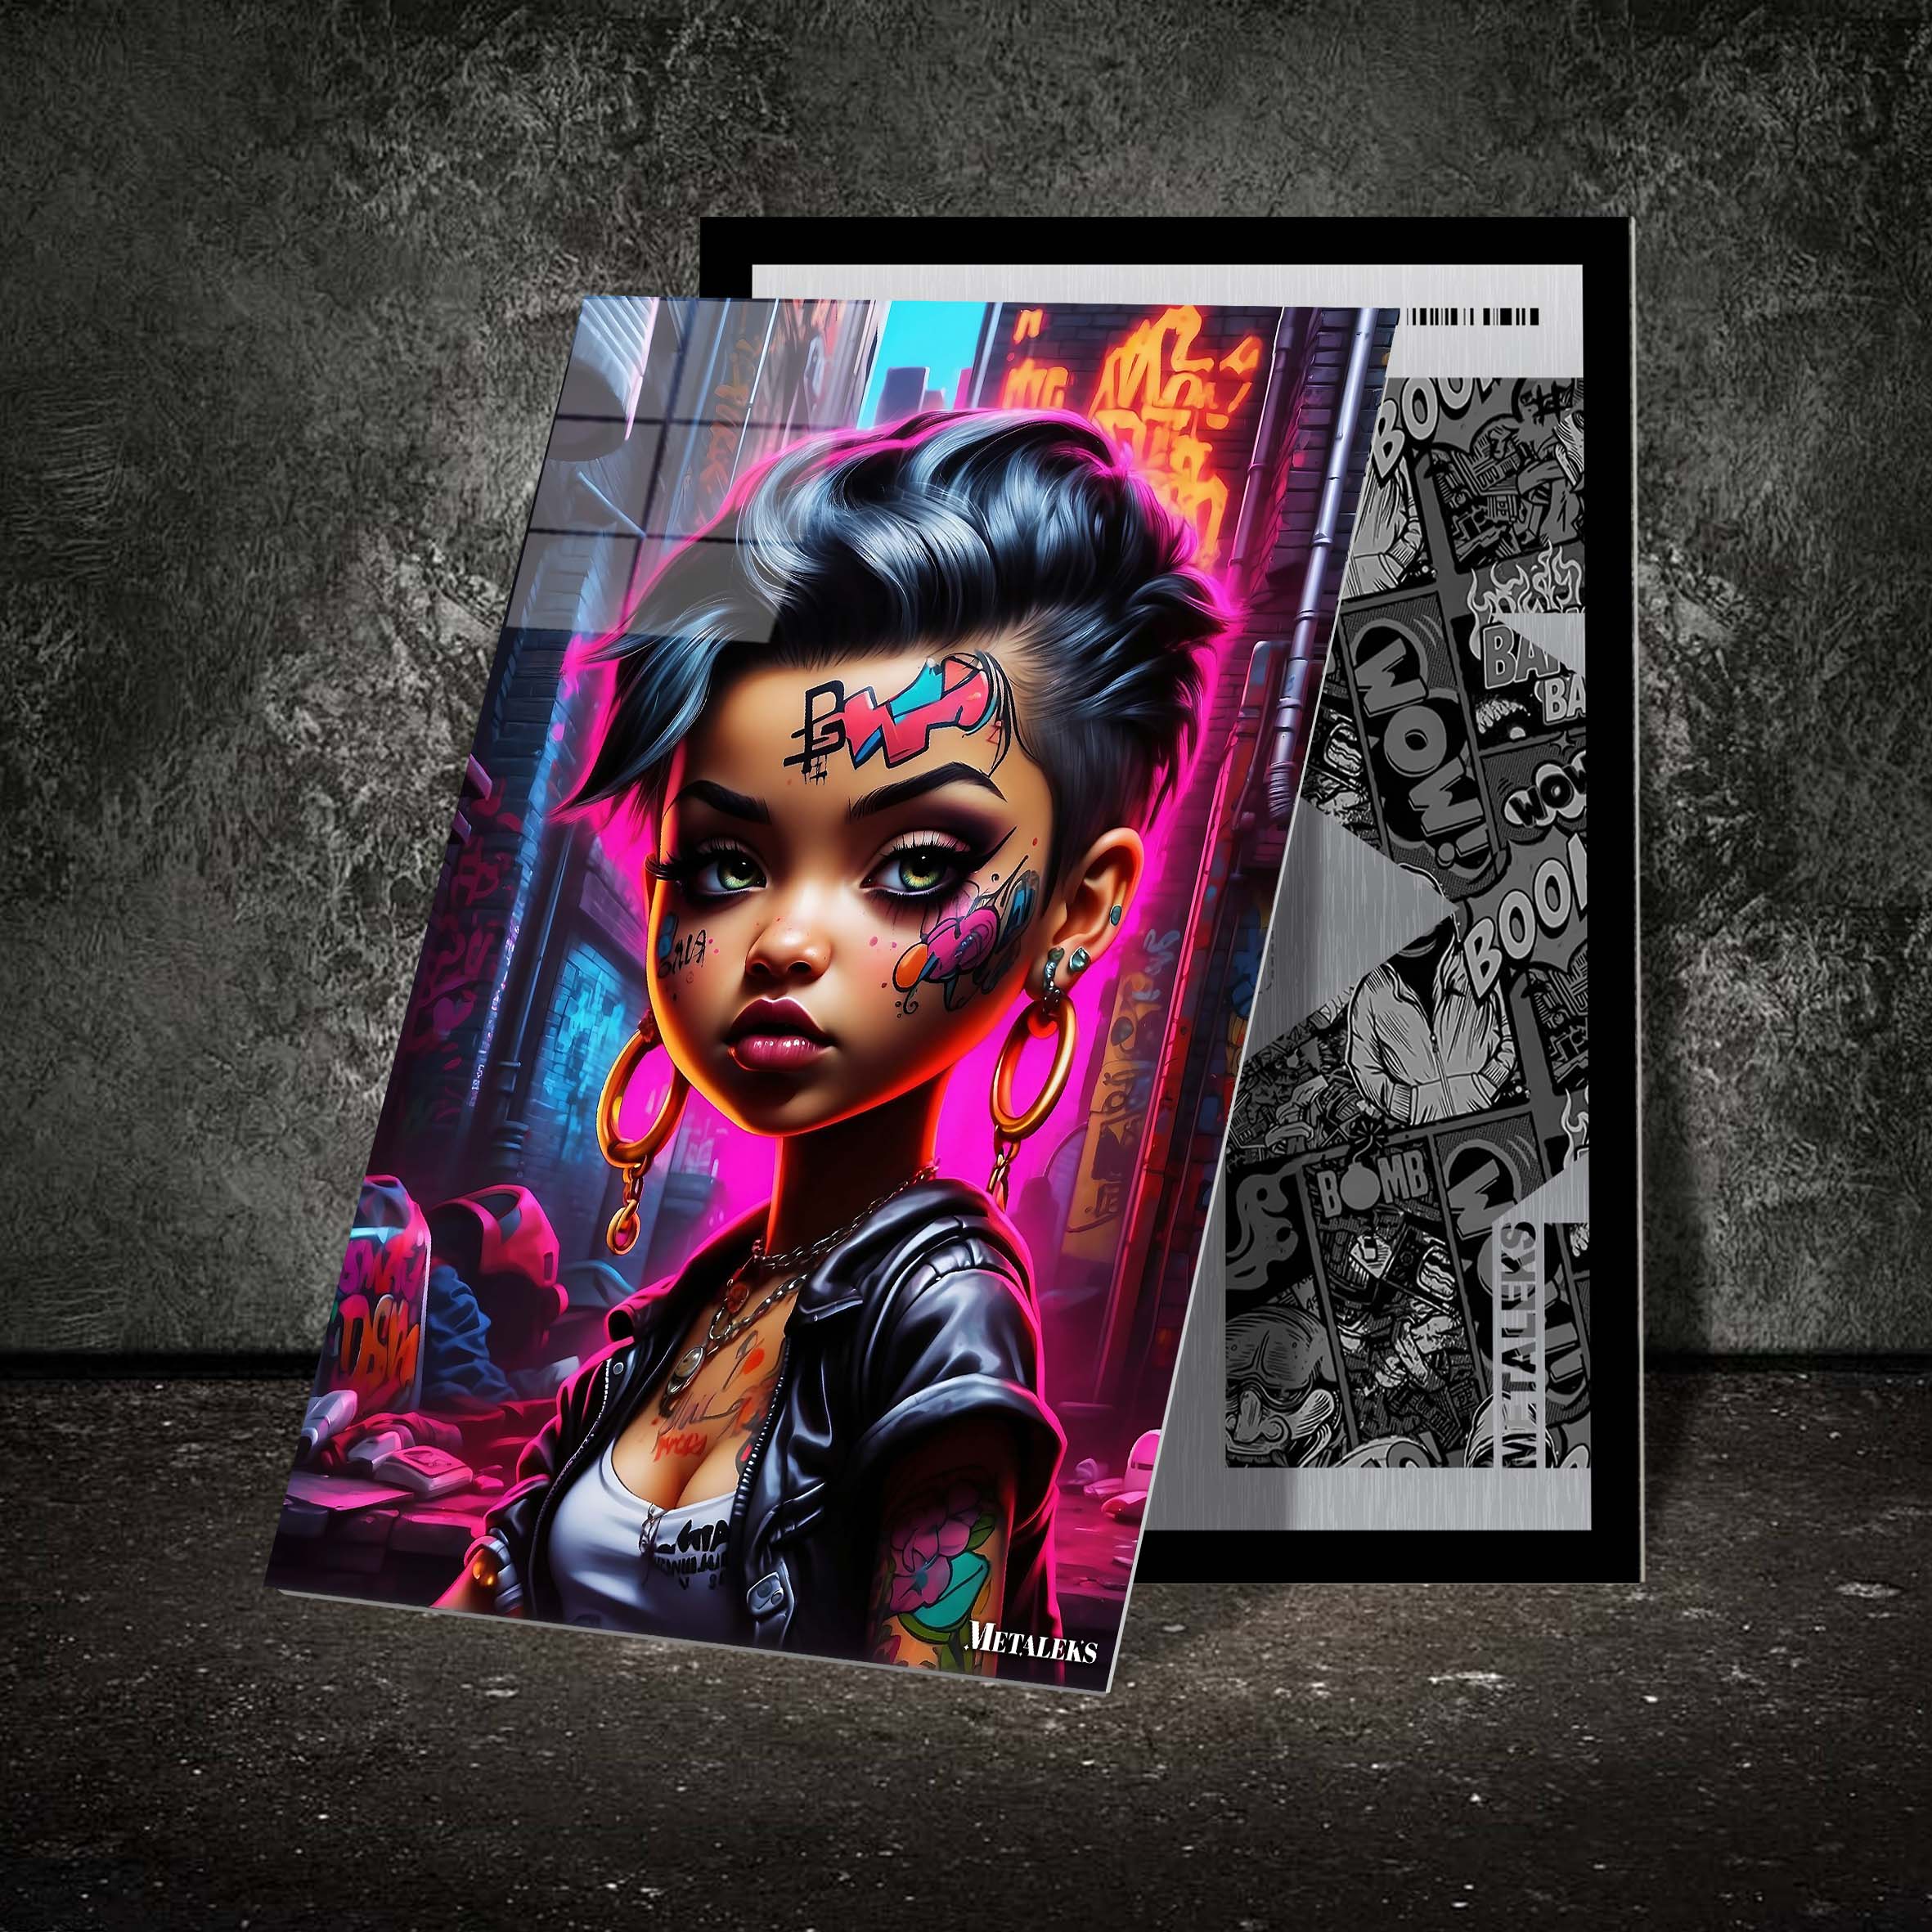 Apocalyptic Girl #4-designed by @Vivid Art Studios